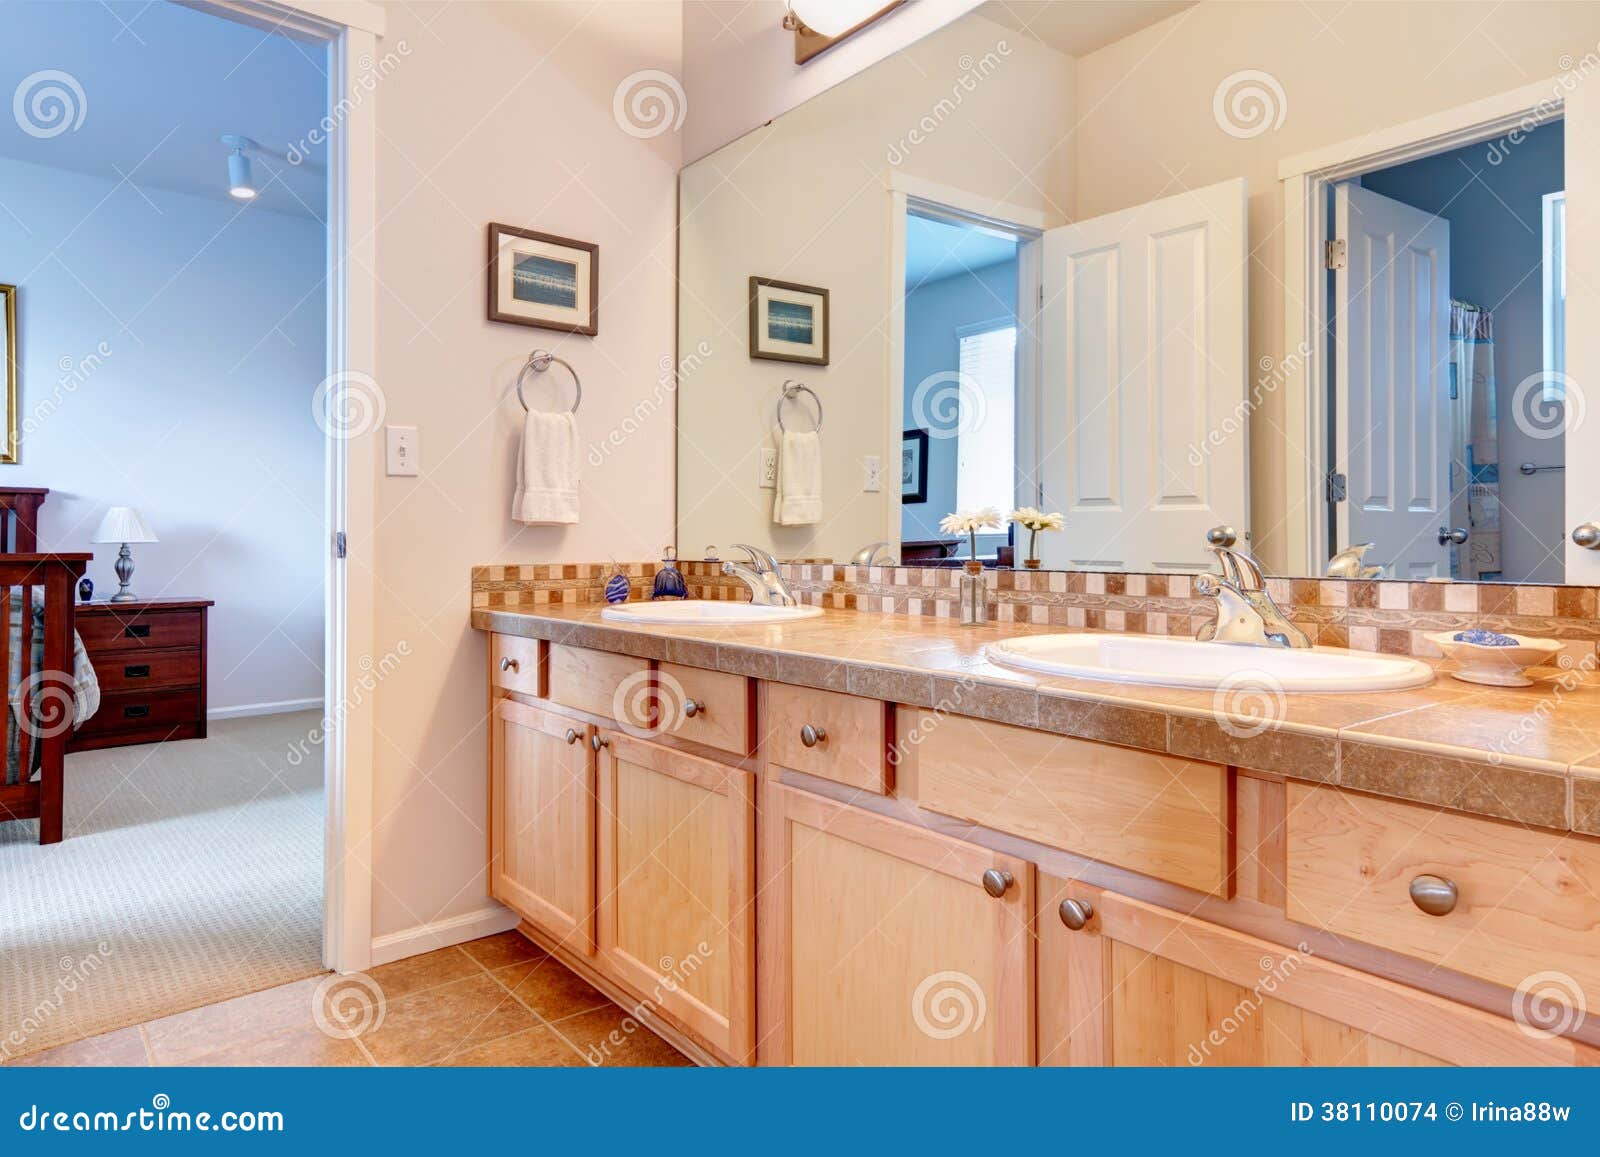 Warm Colors Bathroom With Big Mirror Stock Photo Image Of